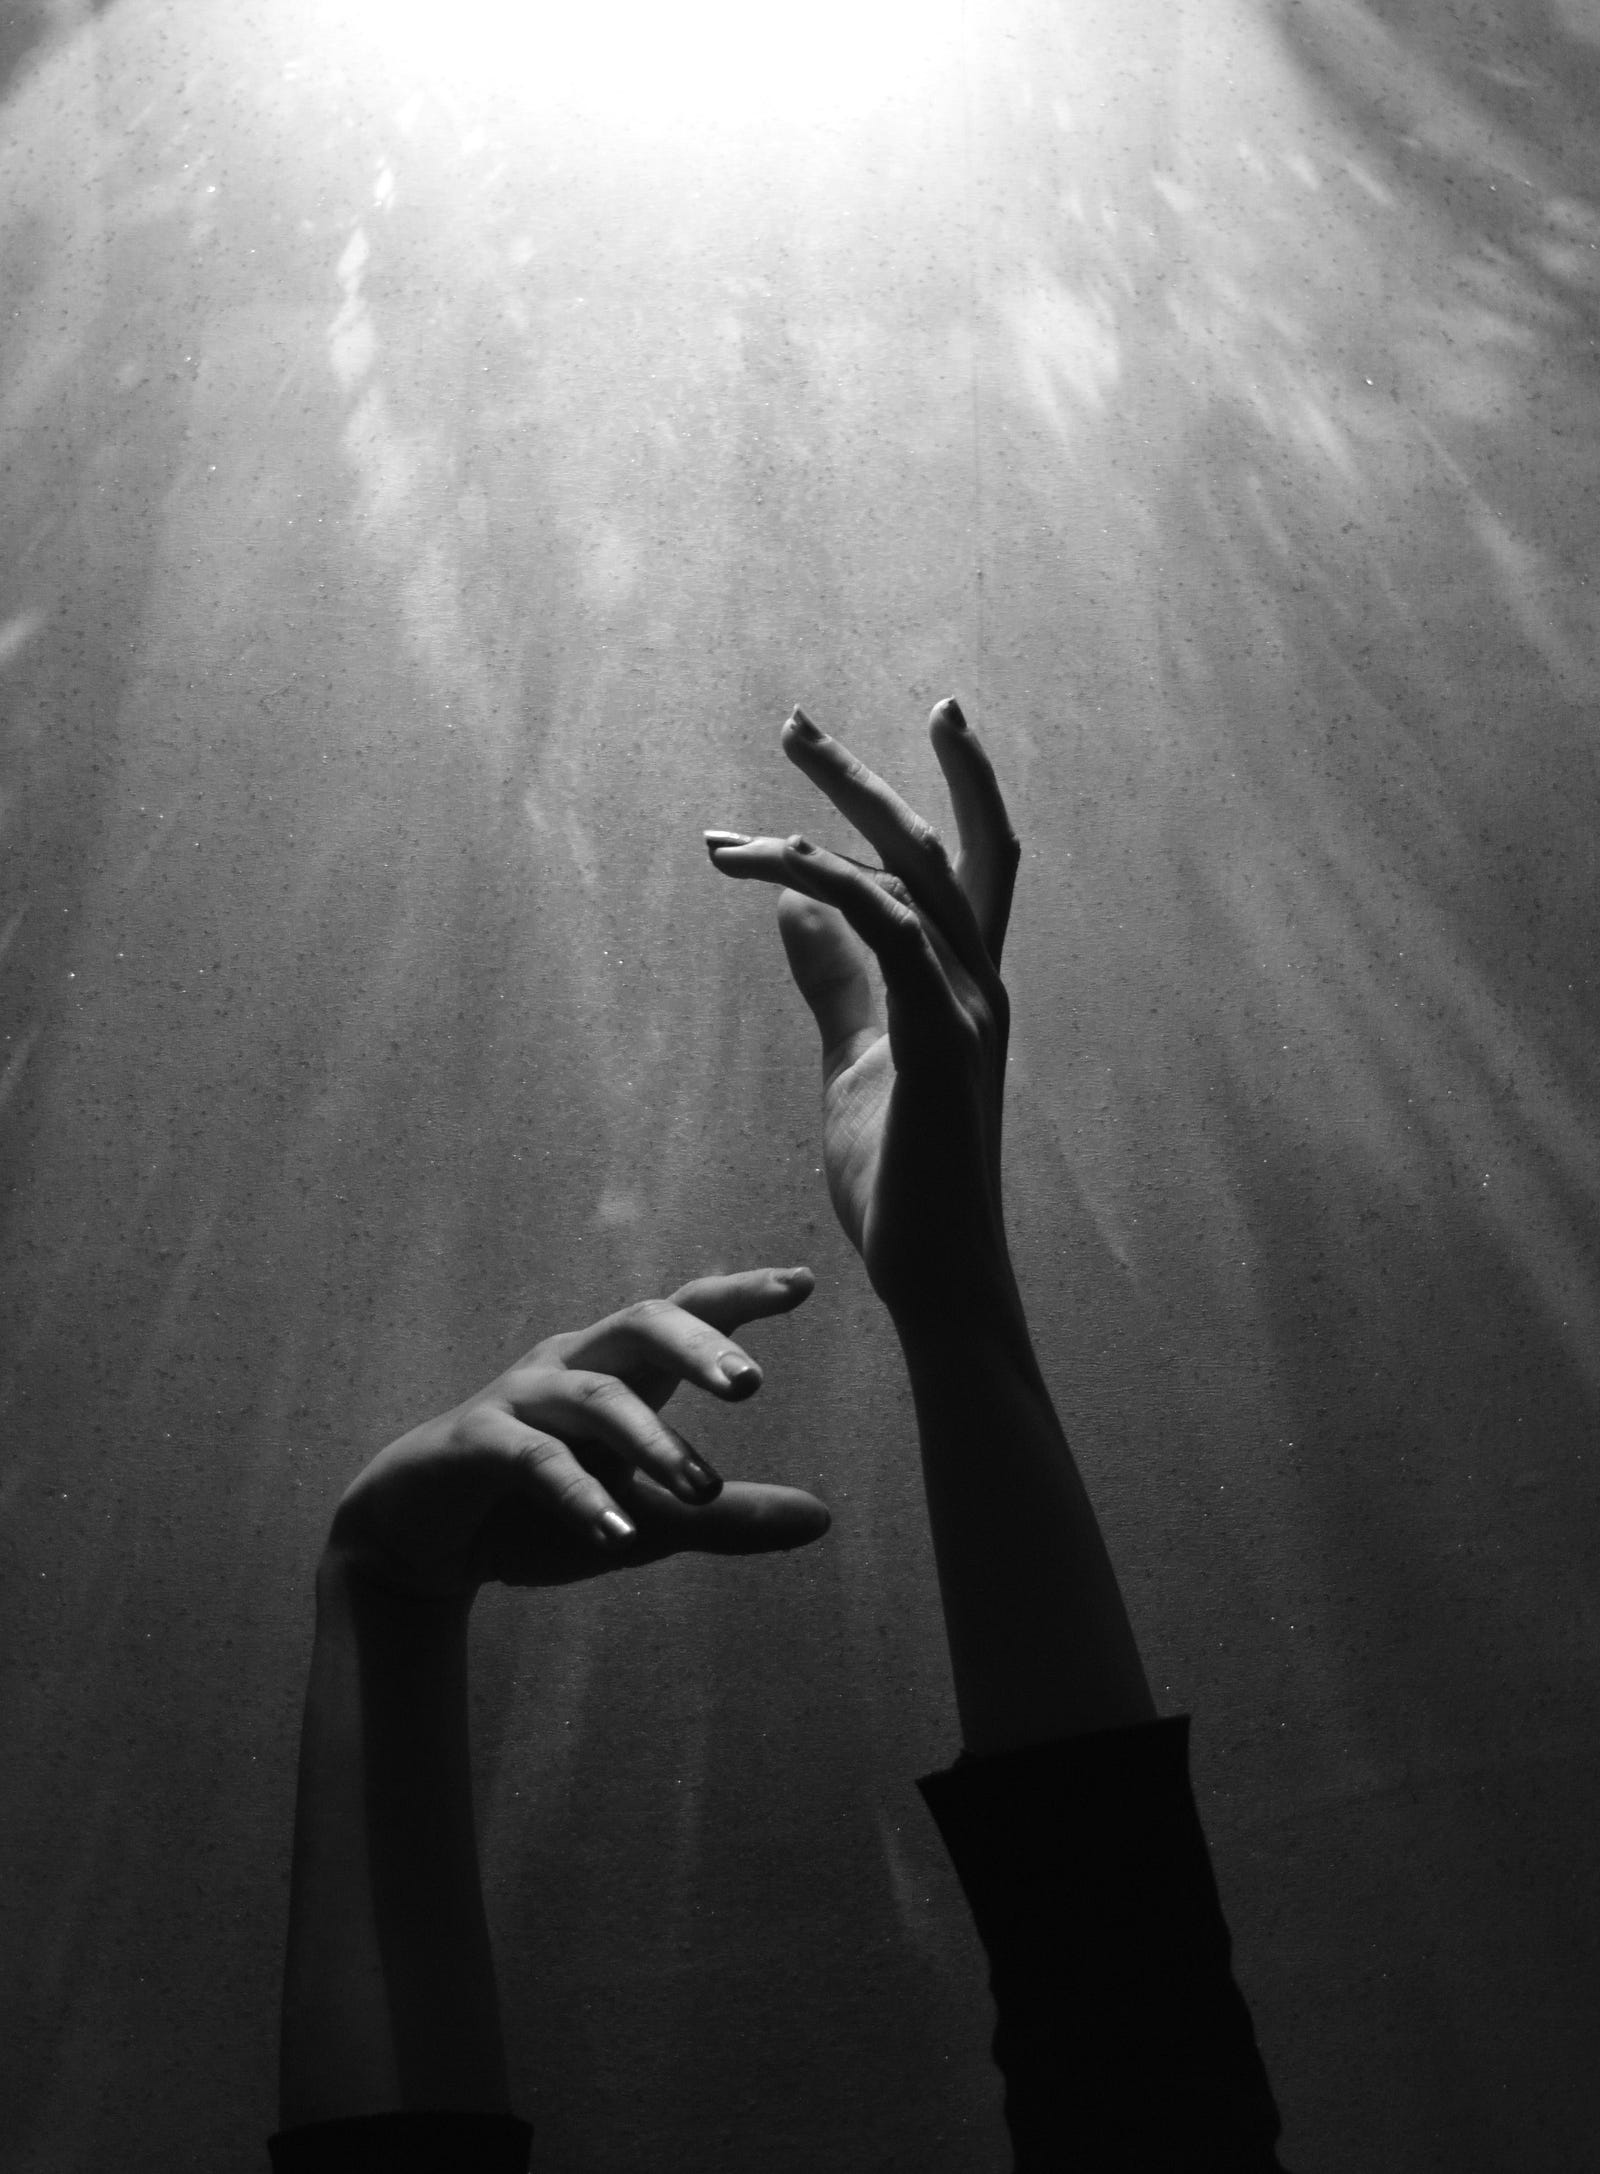 Two underwater arthritic hands reach upward. Black and white image.